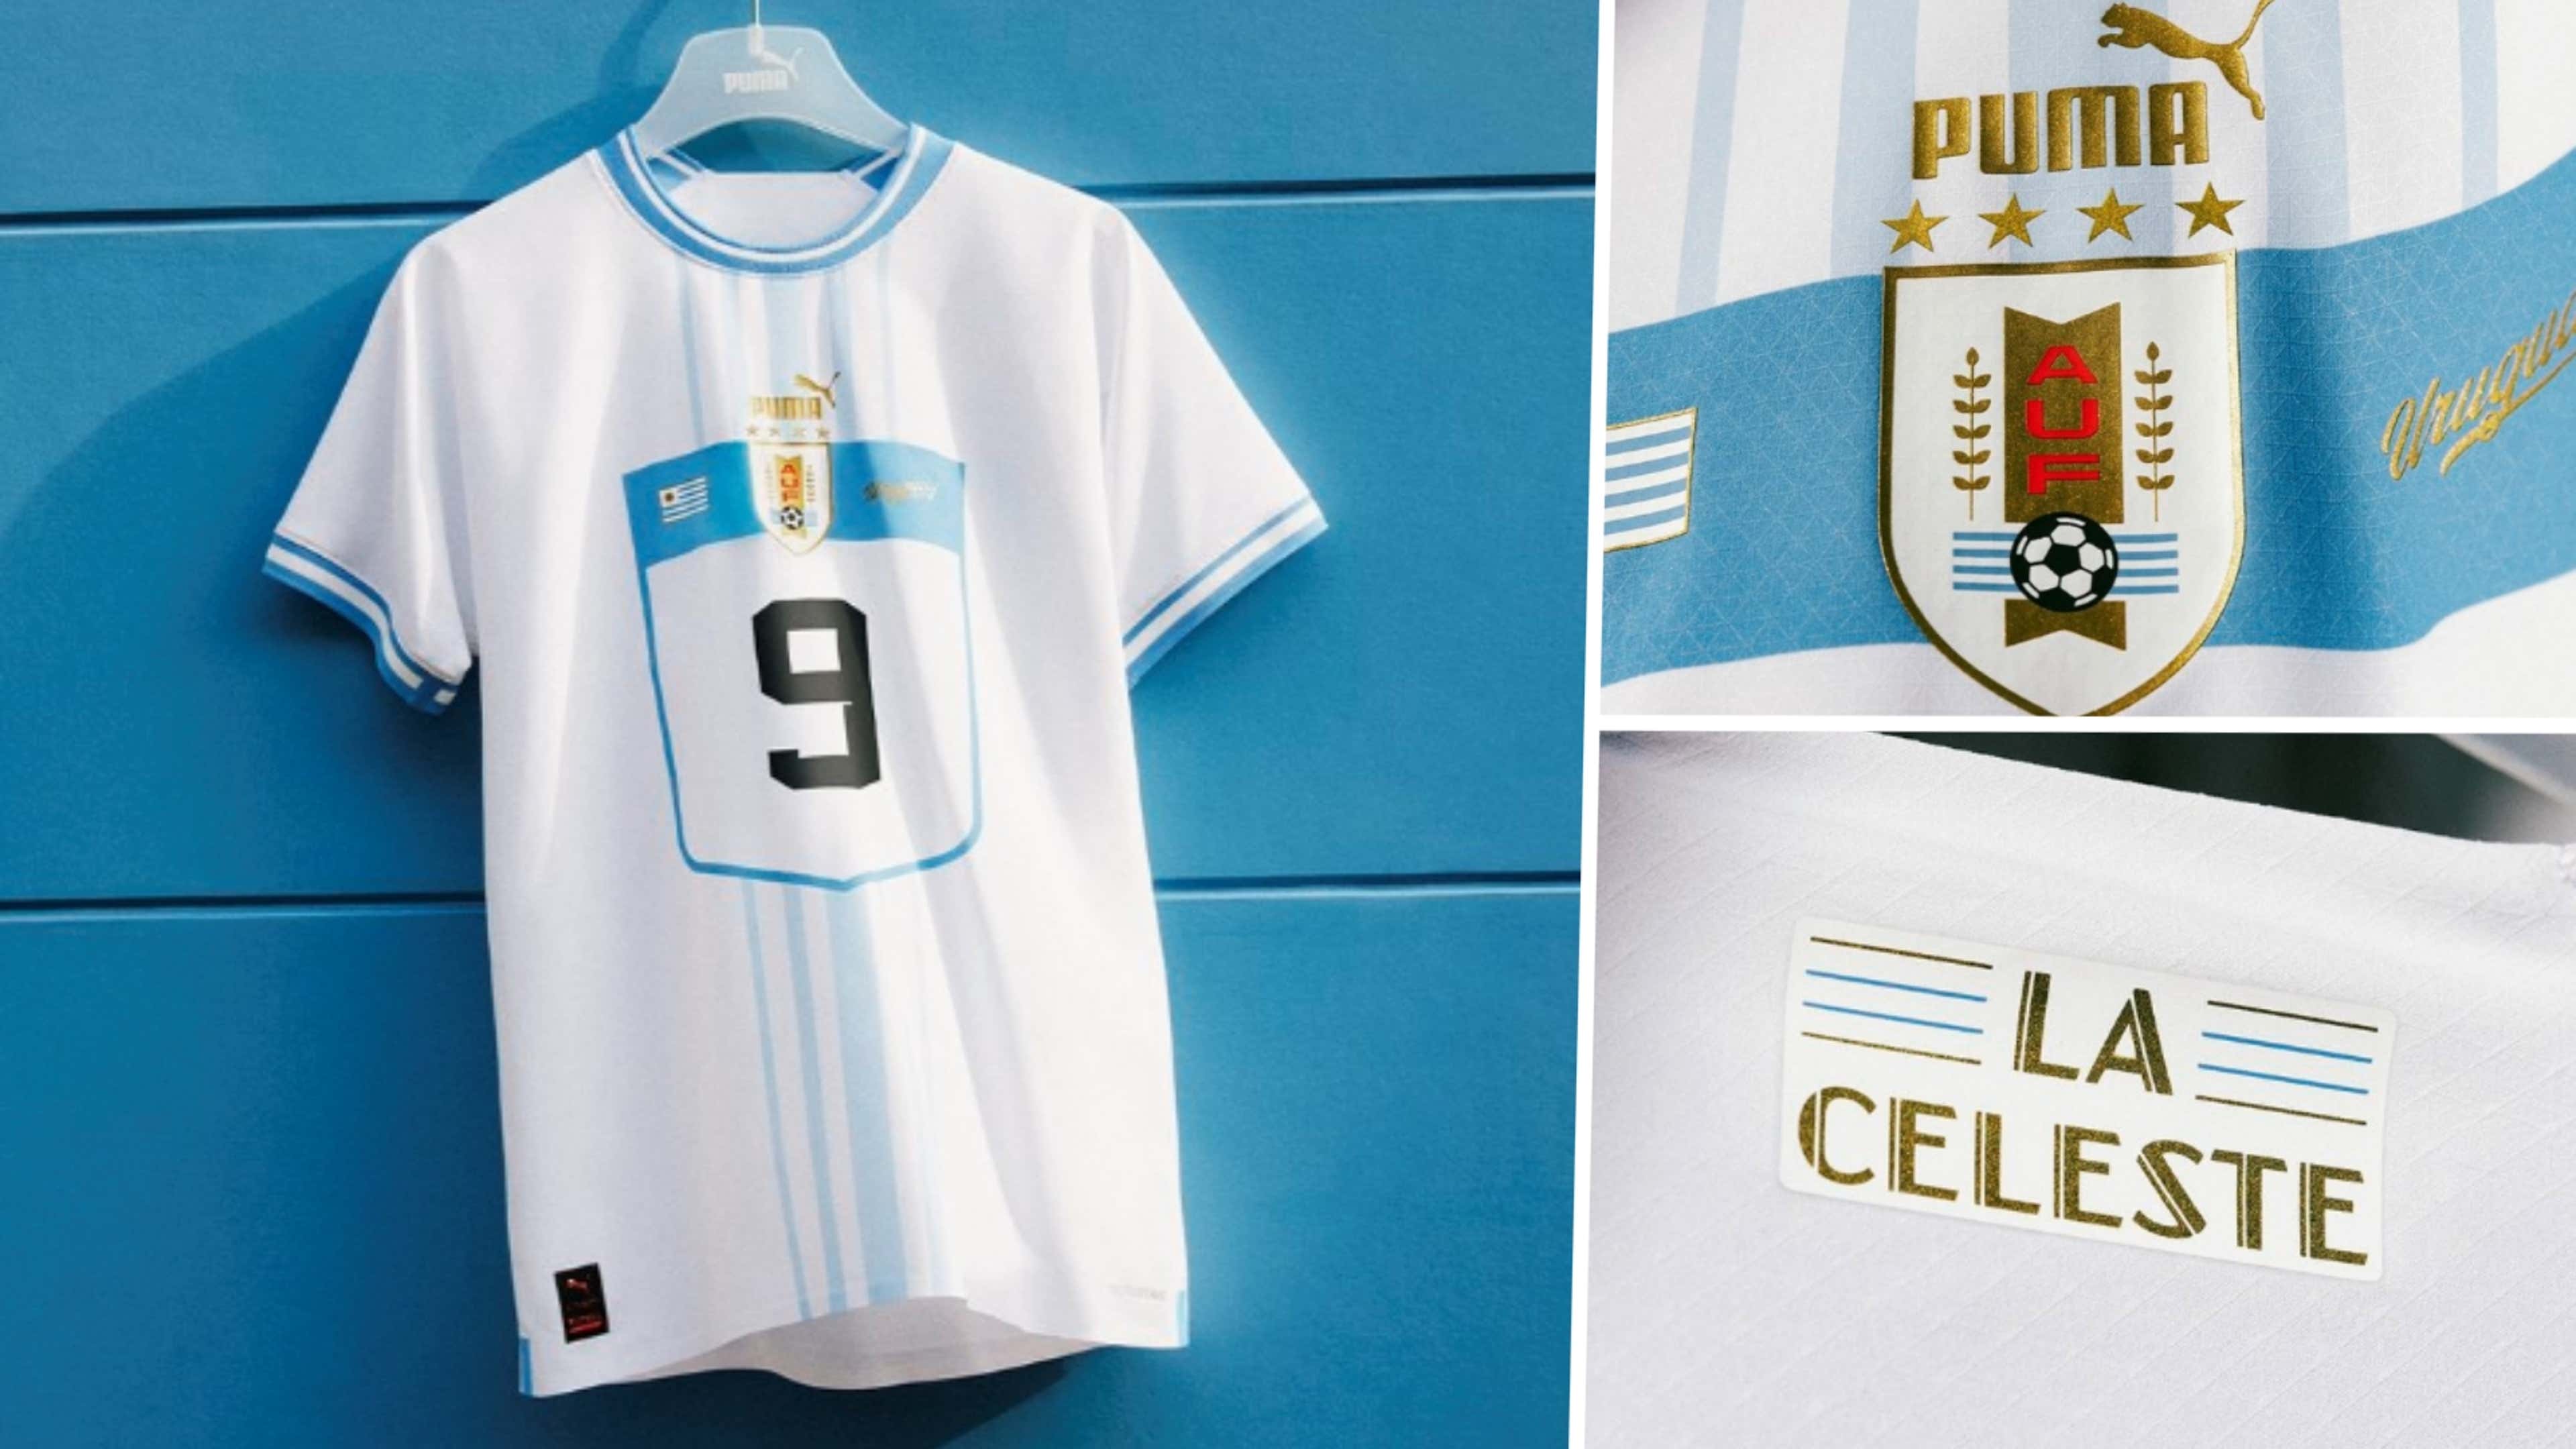 Uruguay World Cup 2022 Spirit Tee | Various Designs